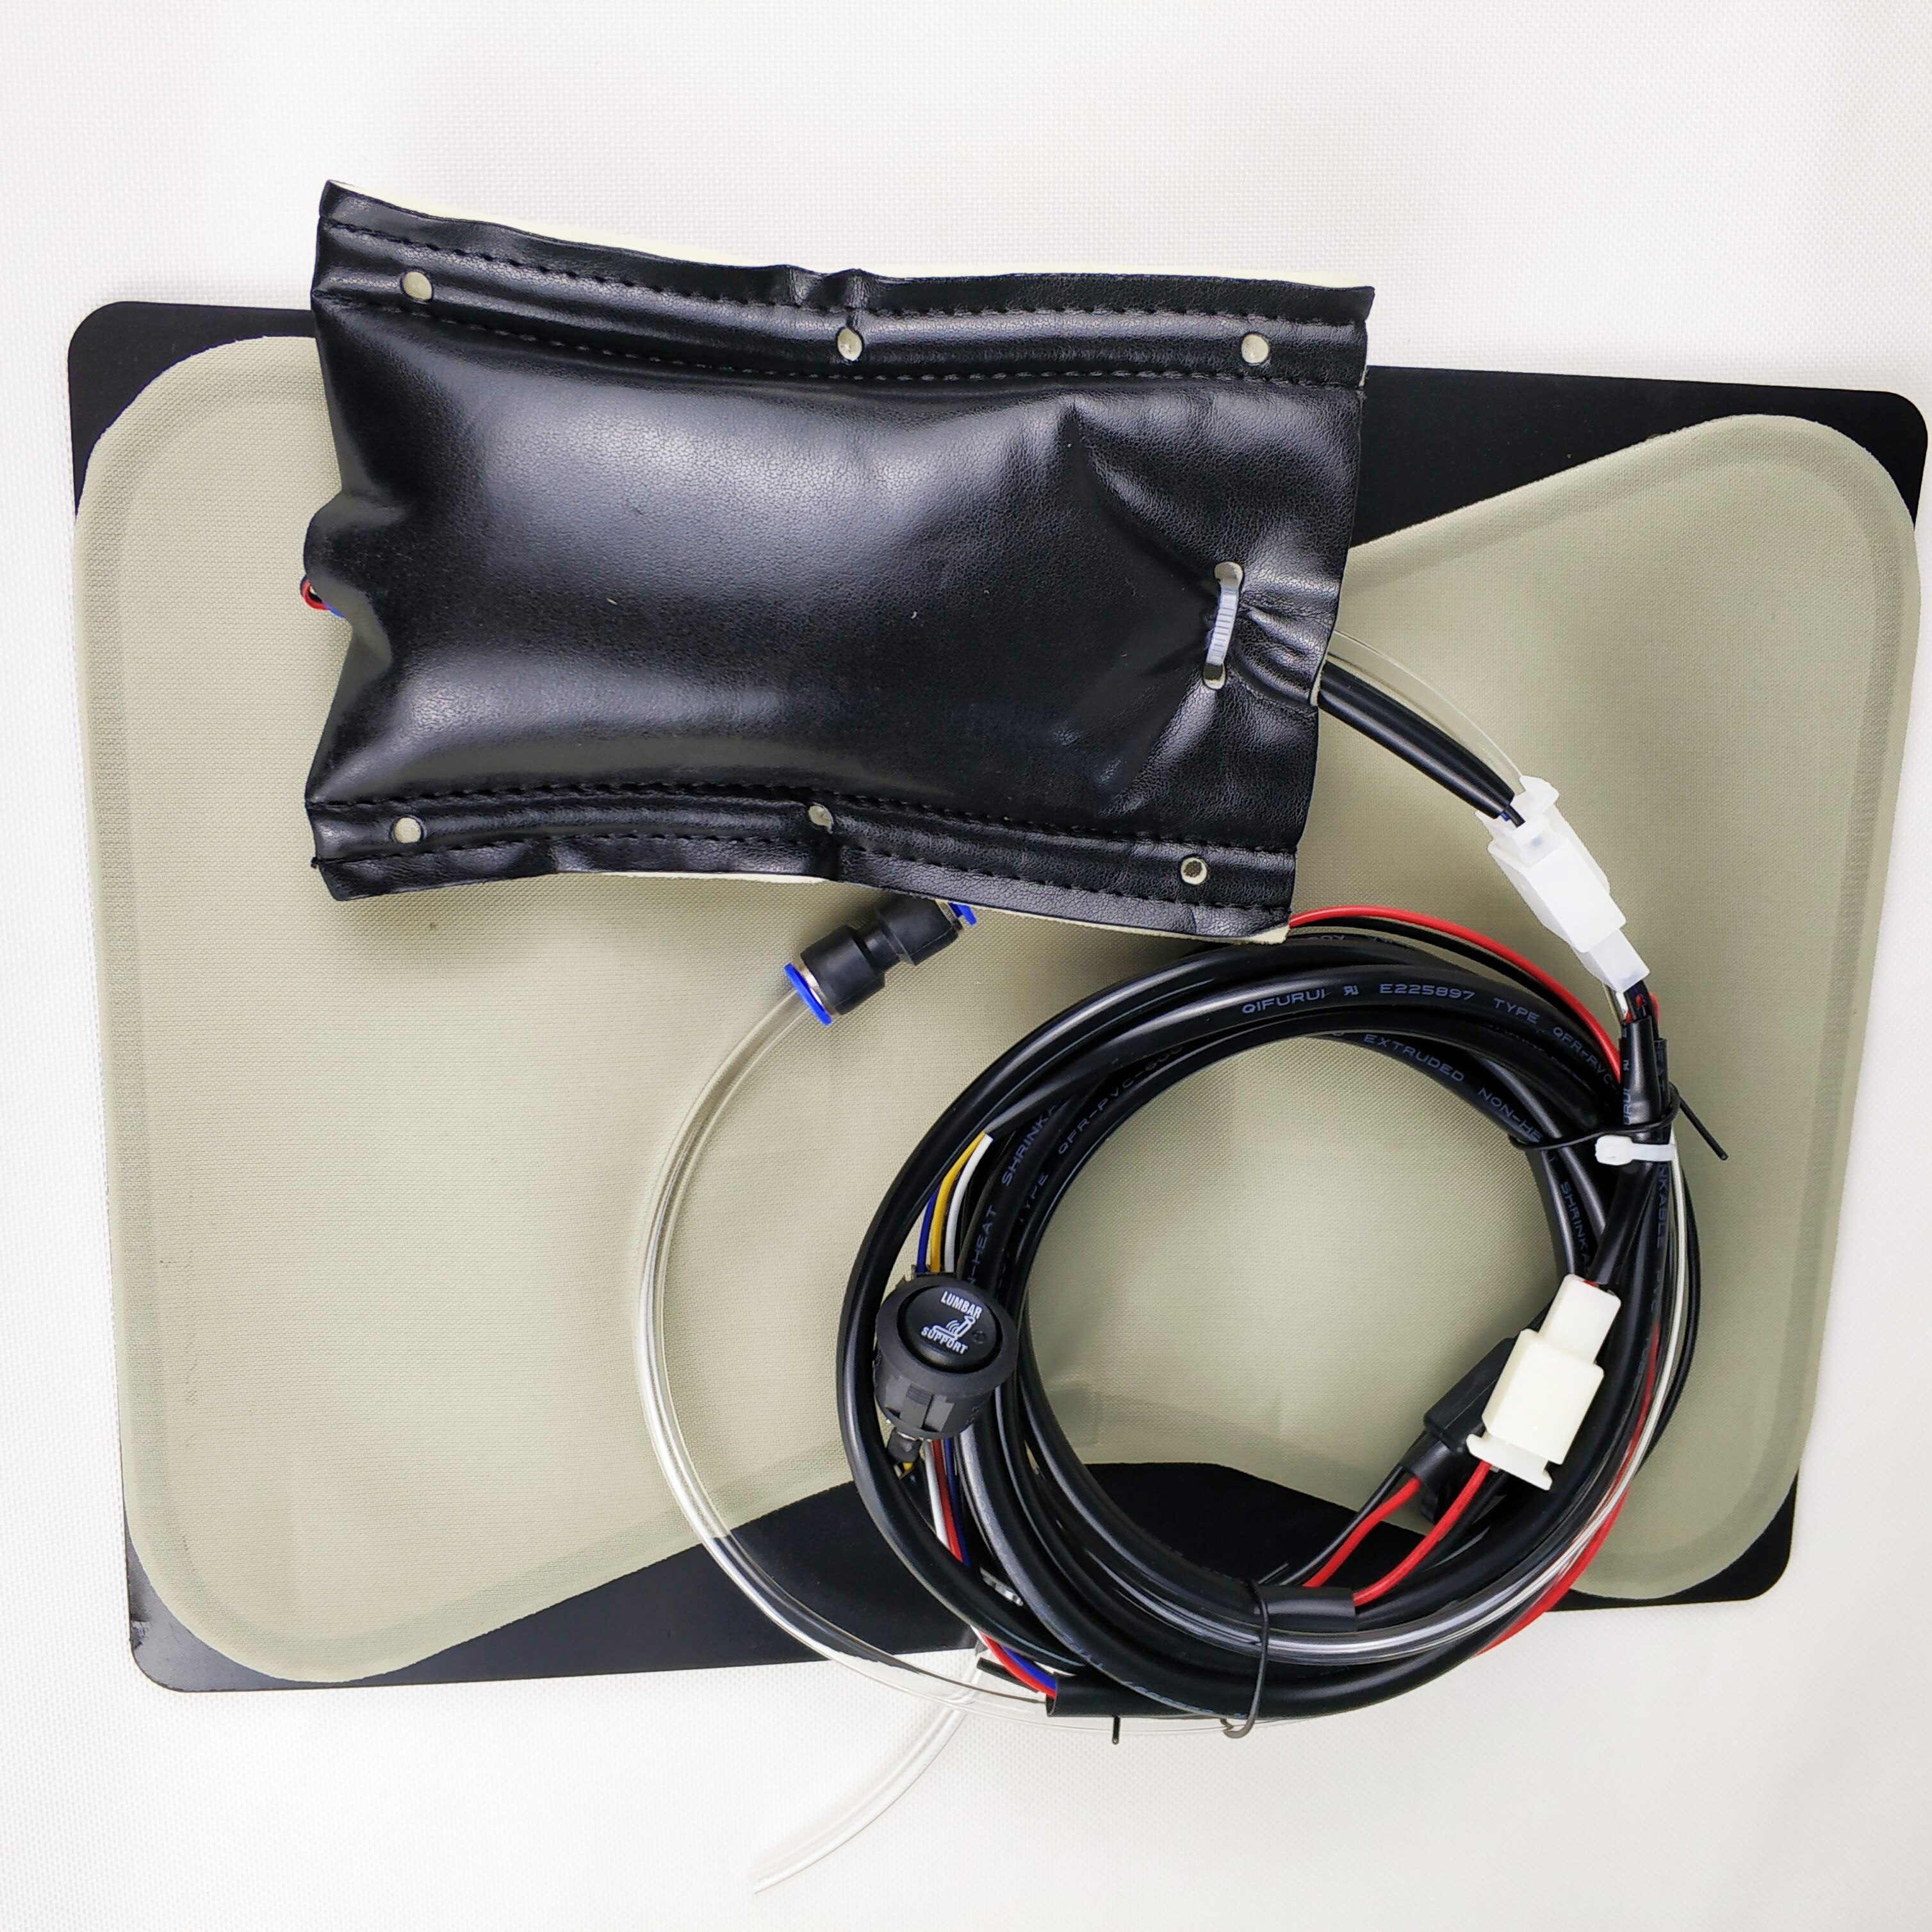 pneumatic electric lumbar auto seat air Embedded lumbar airbag bladder switch comfort support seat cushion pillow massage